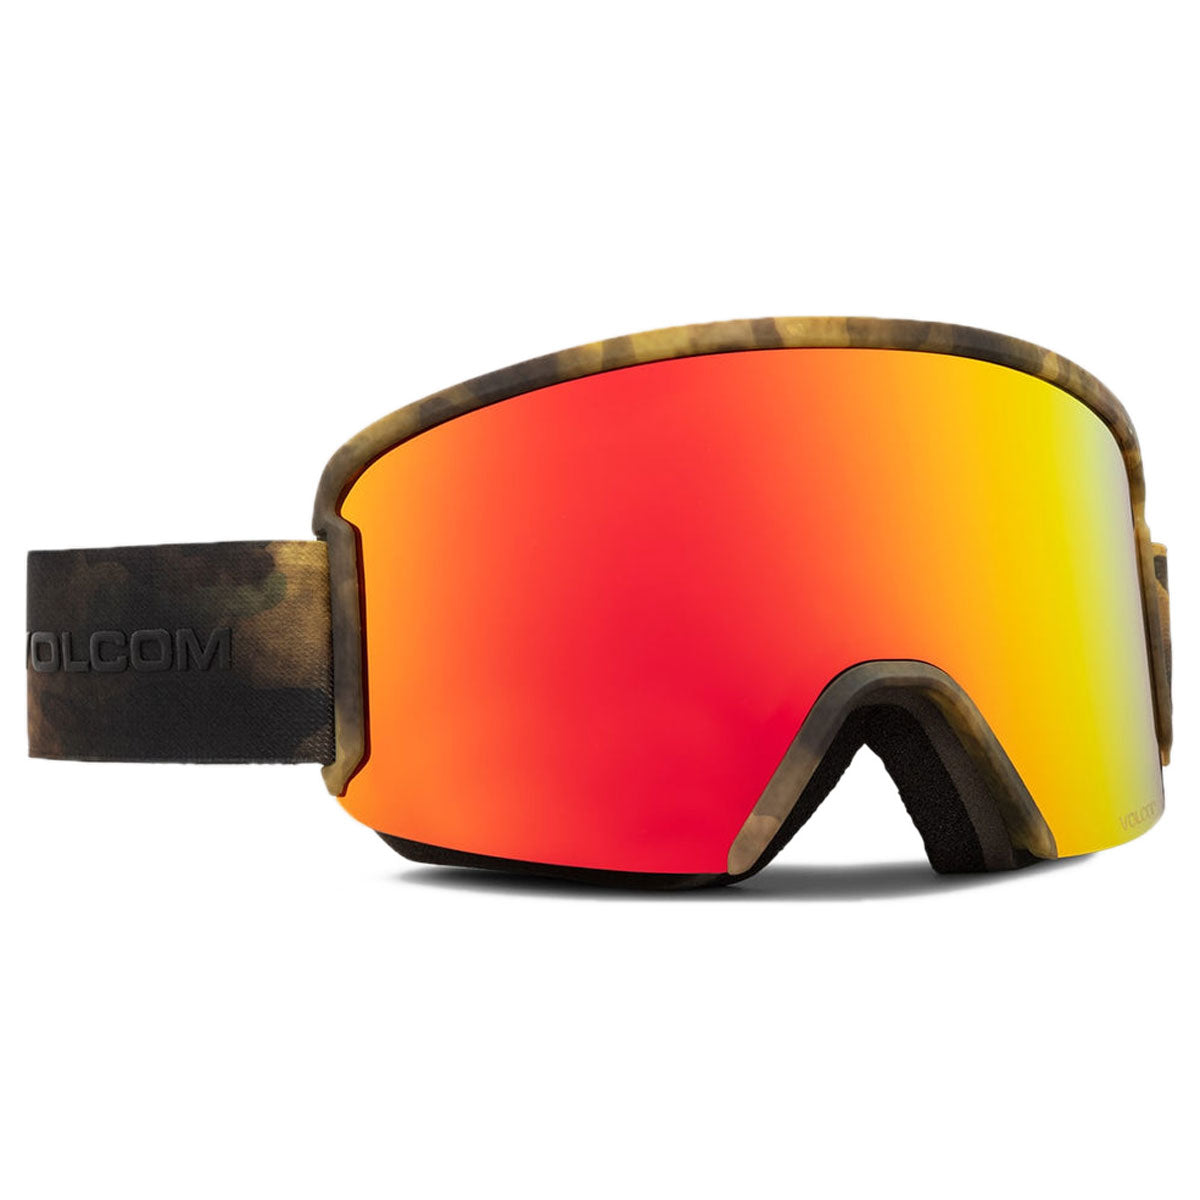 Volcom Garden Snowboard Goggles - Camo/Red Chrome image 3